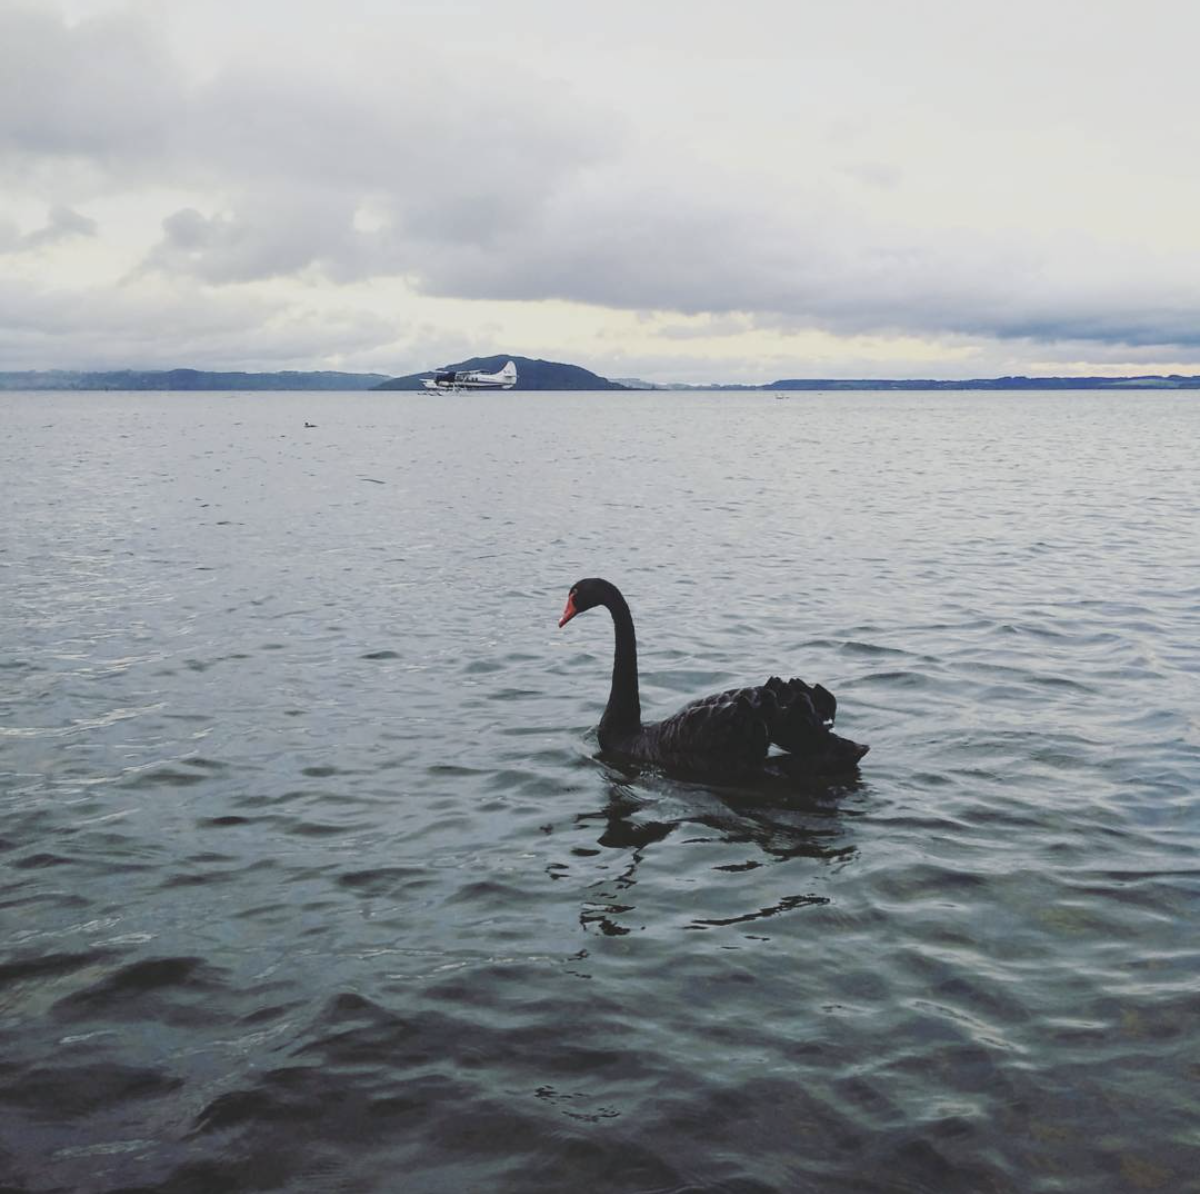 Black swans around the lake